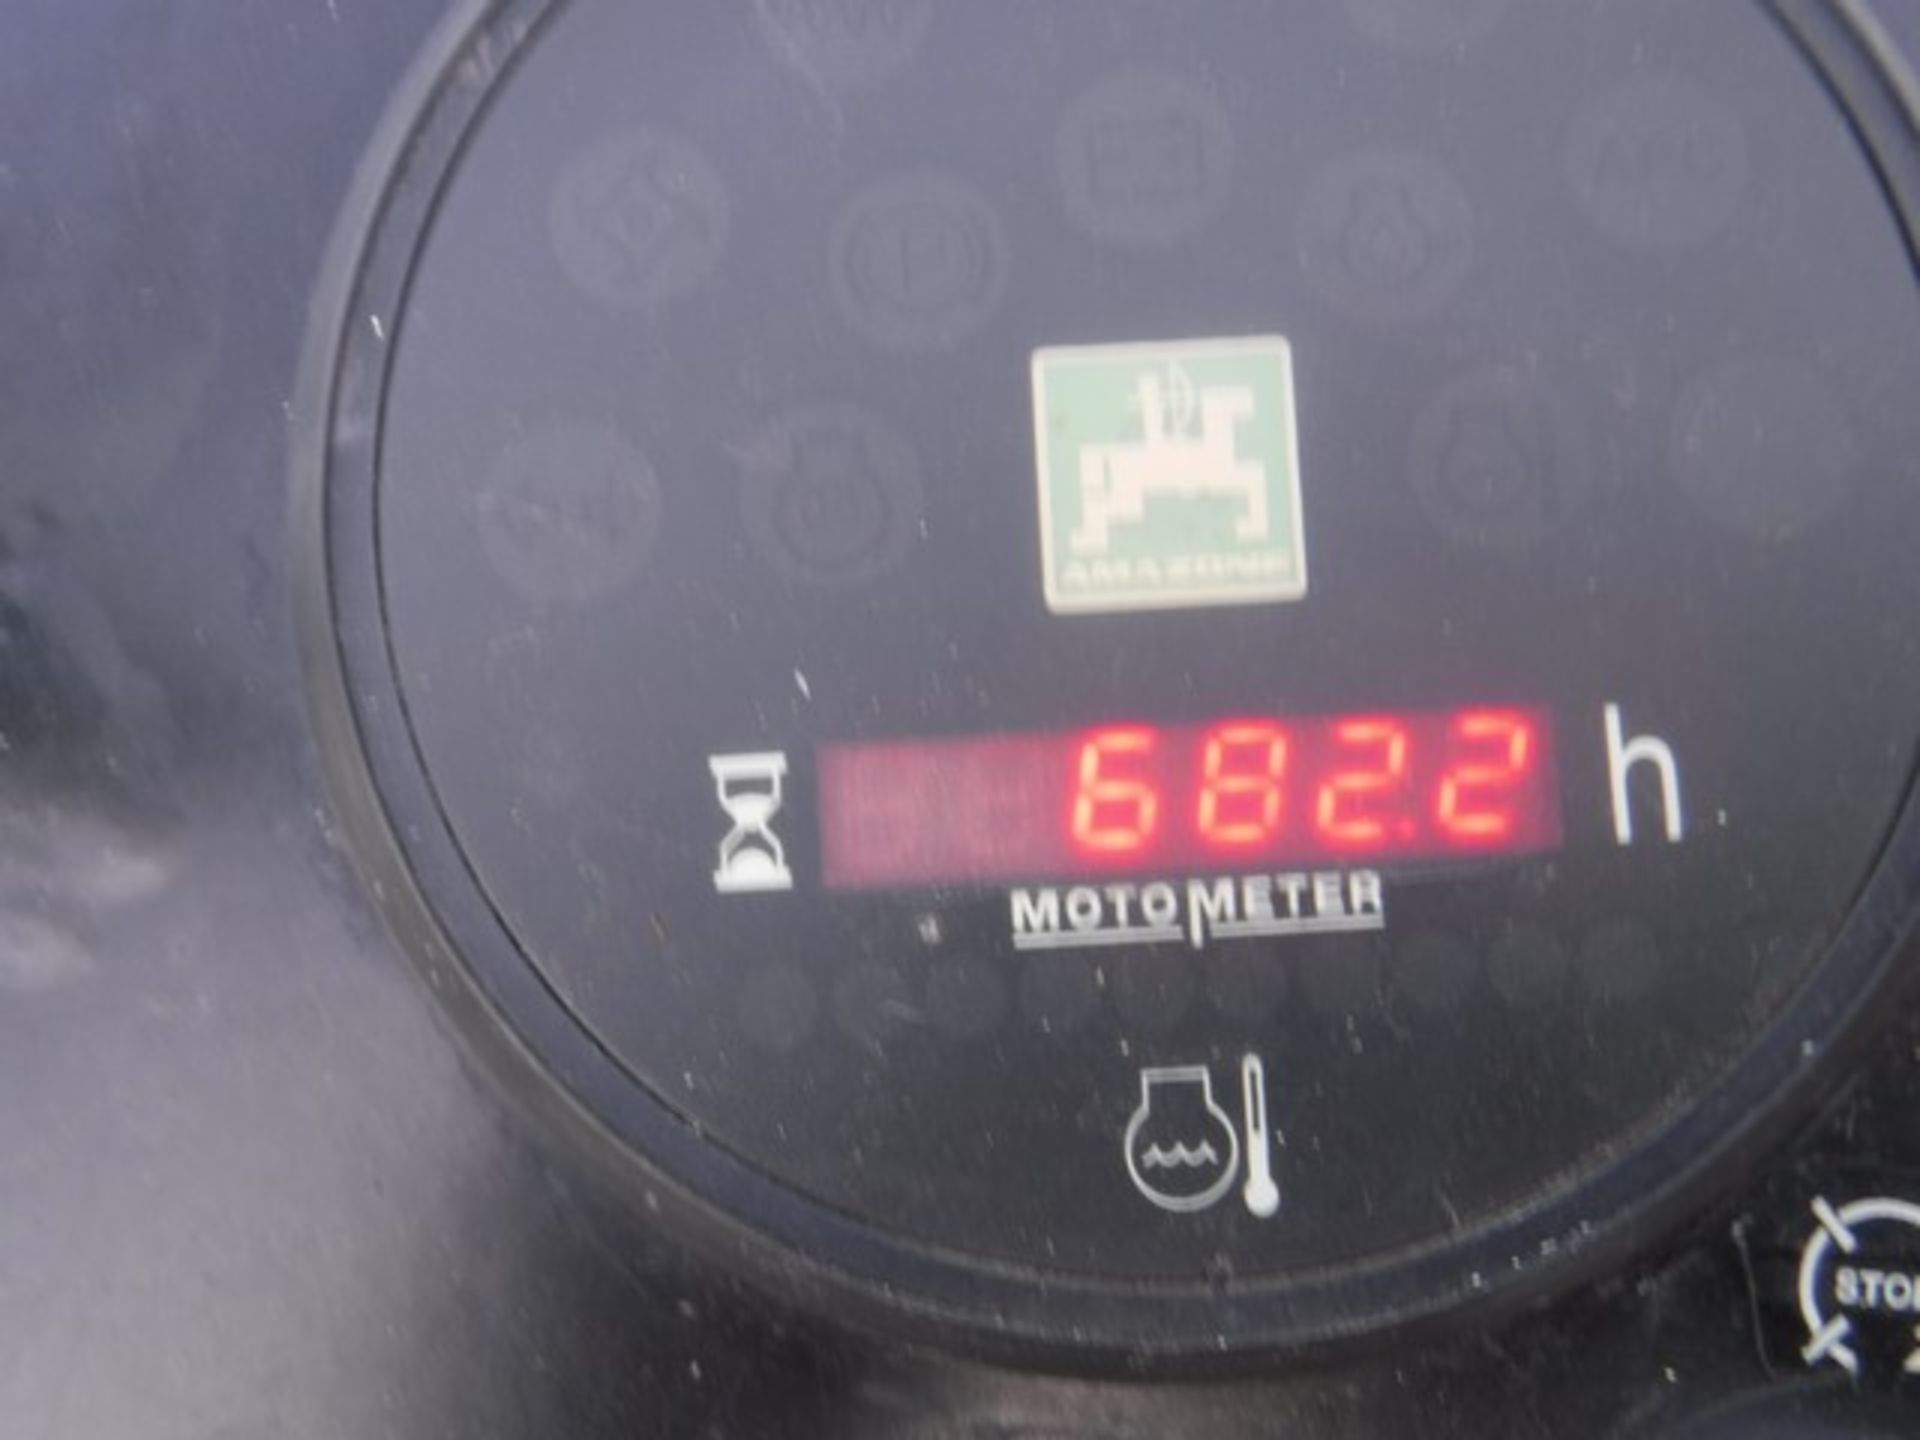 2008 AMAZONE PH125 disel flail cut & lift ride on mower. FL NO CP3597. 682 hrs (not verified) - Bild 4 aus 4